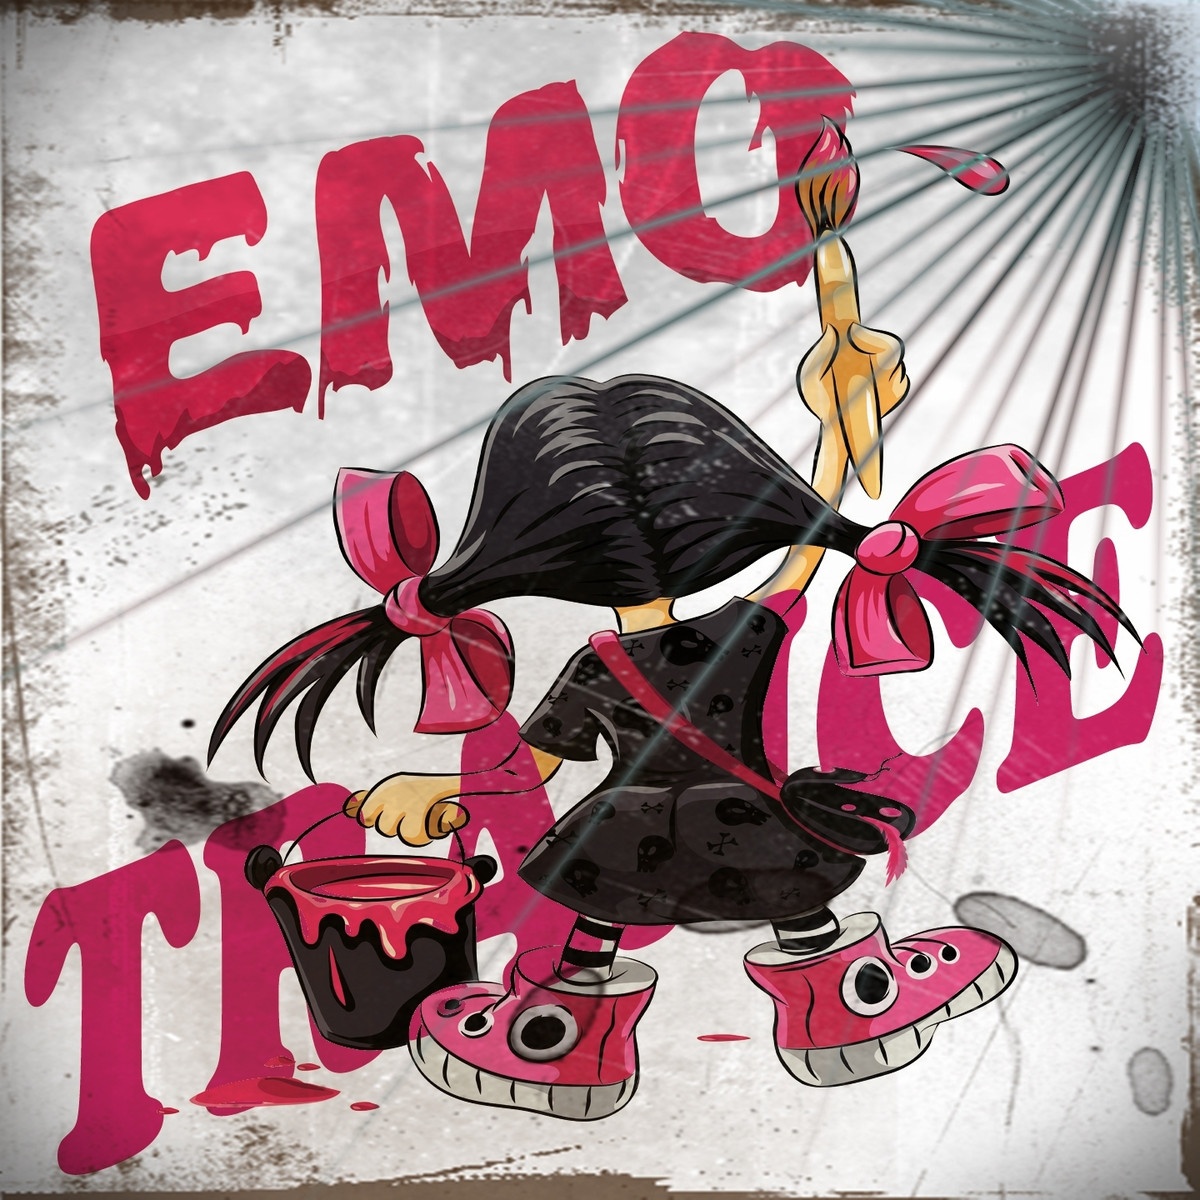 Emo Trance 2013 (Best Of Emotional & Melodic Emos Music)